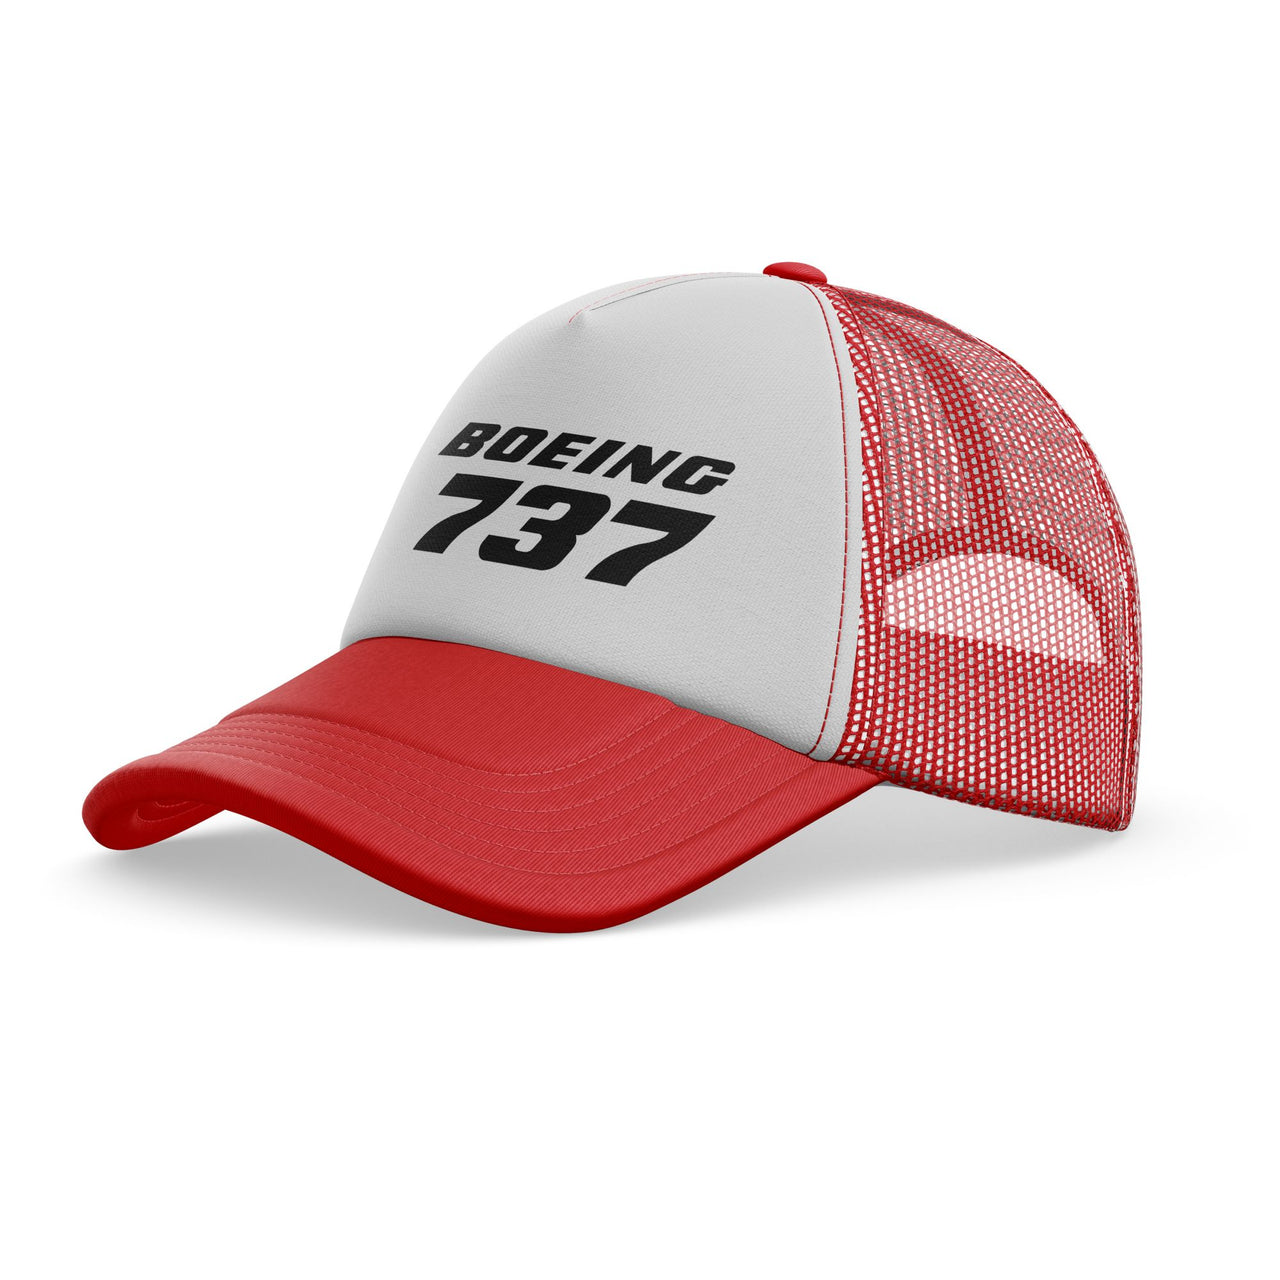 Boeing 737 & Text Designed Trucker Caps & Hats